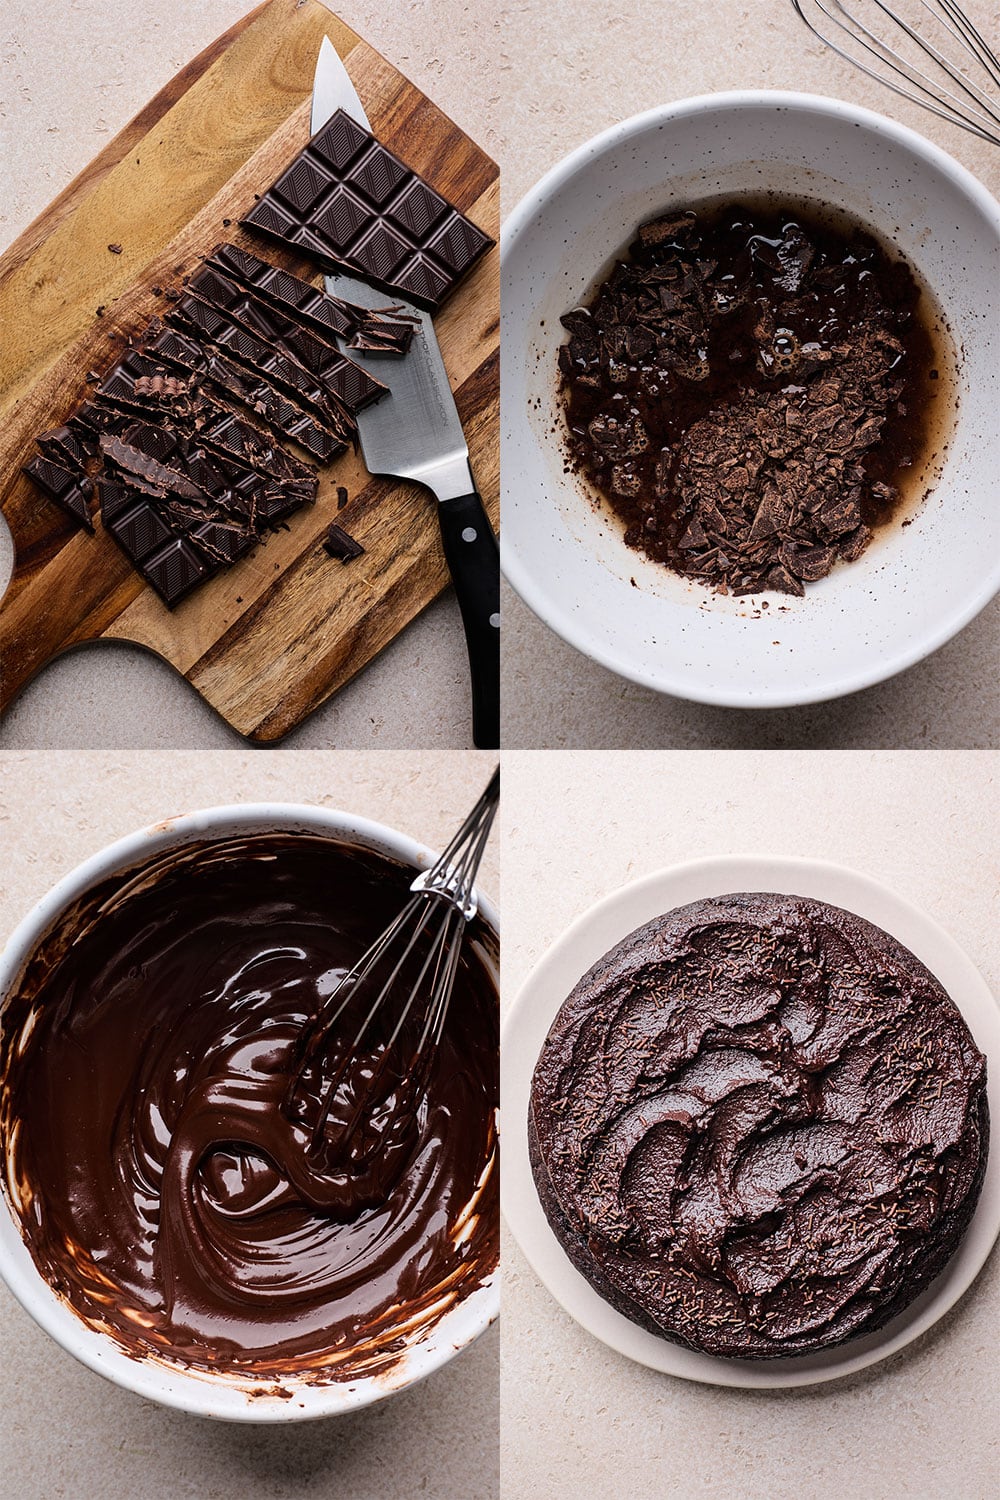 Easy Vegan Chocolate Cake